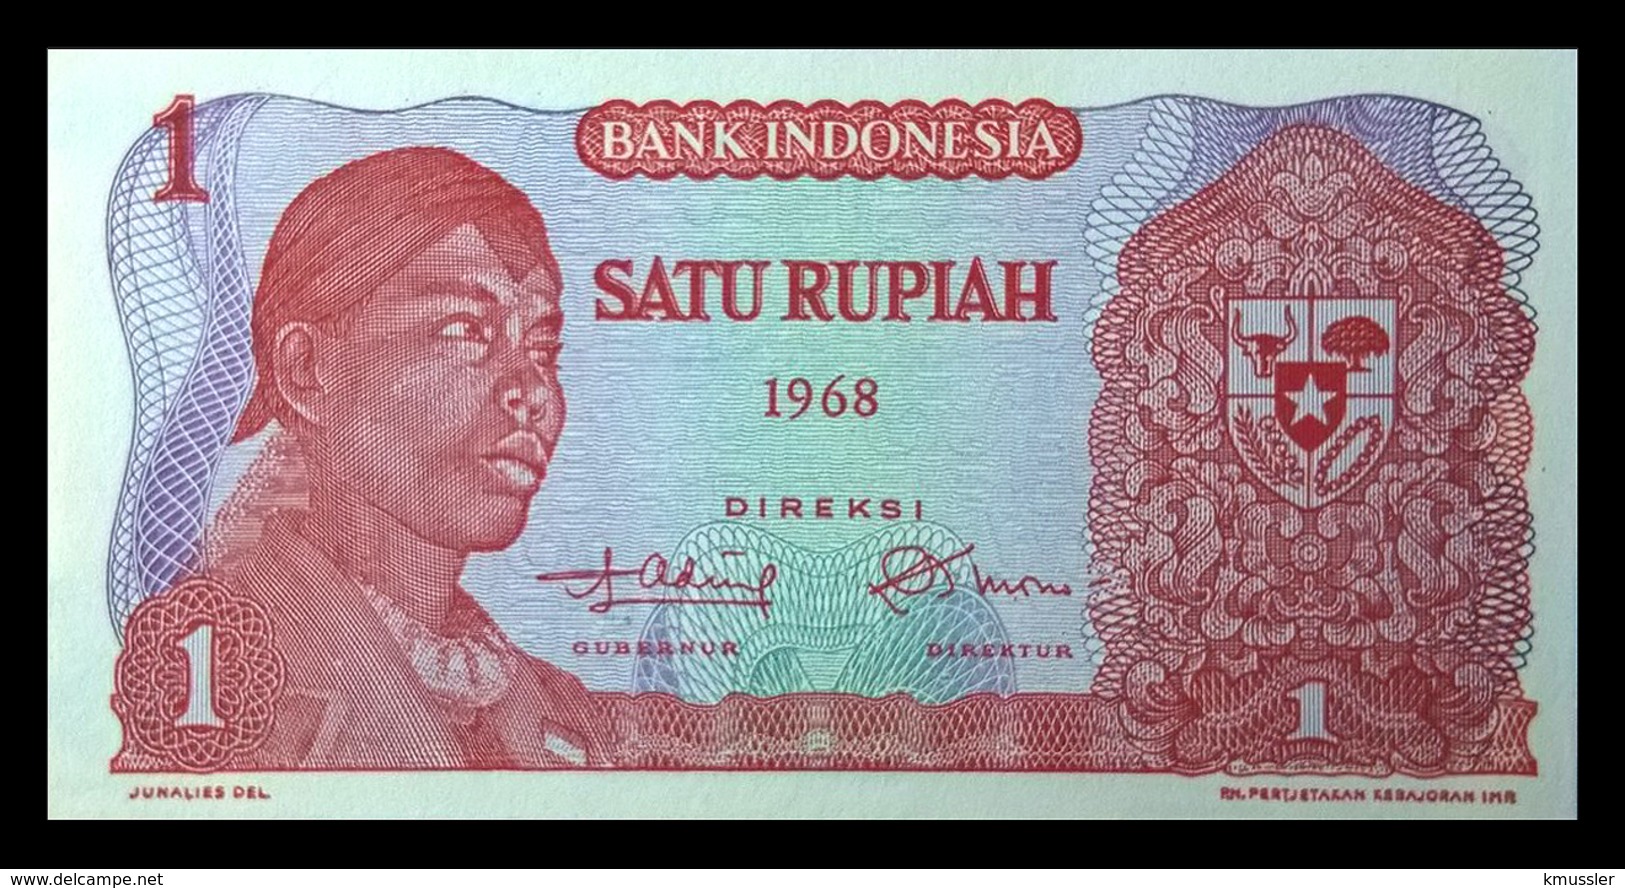 # # # Banknote Indonesien (Indonesia) 1 Rupiah 1968 UNC # # # - Indonesien